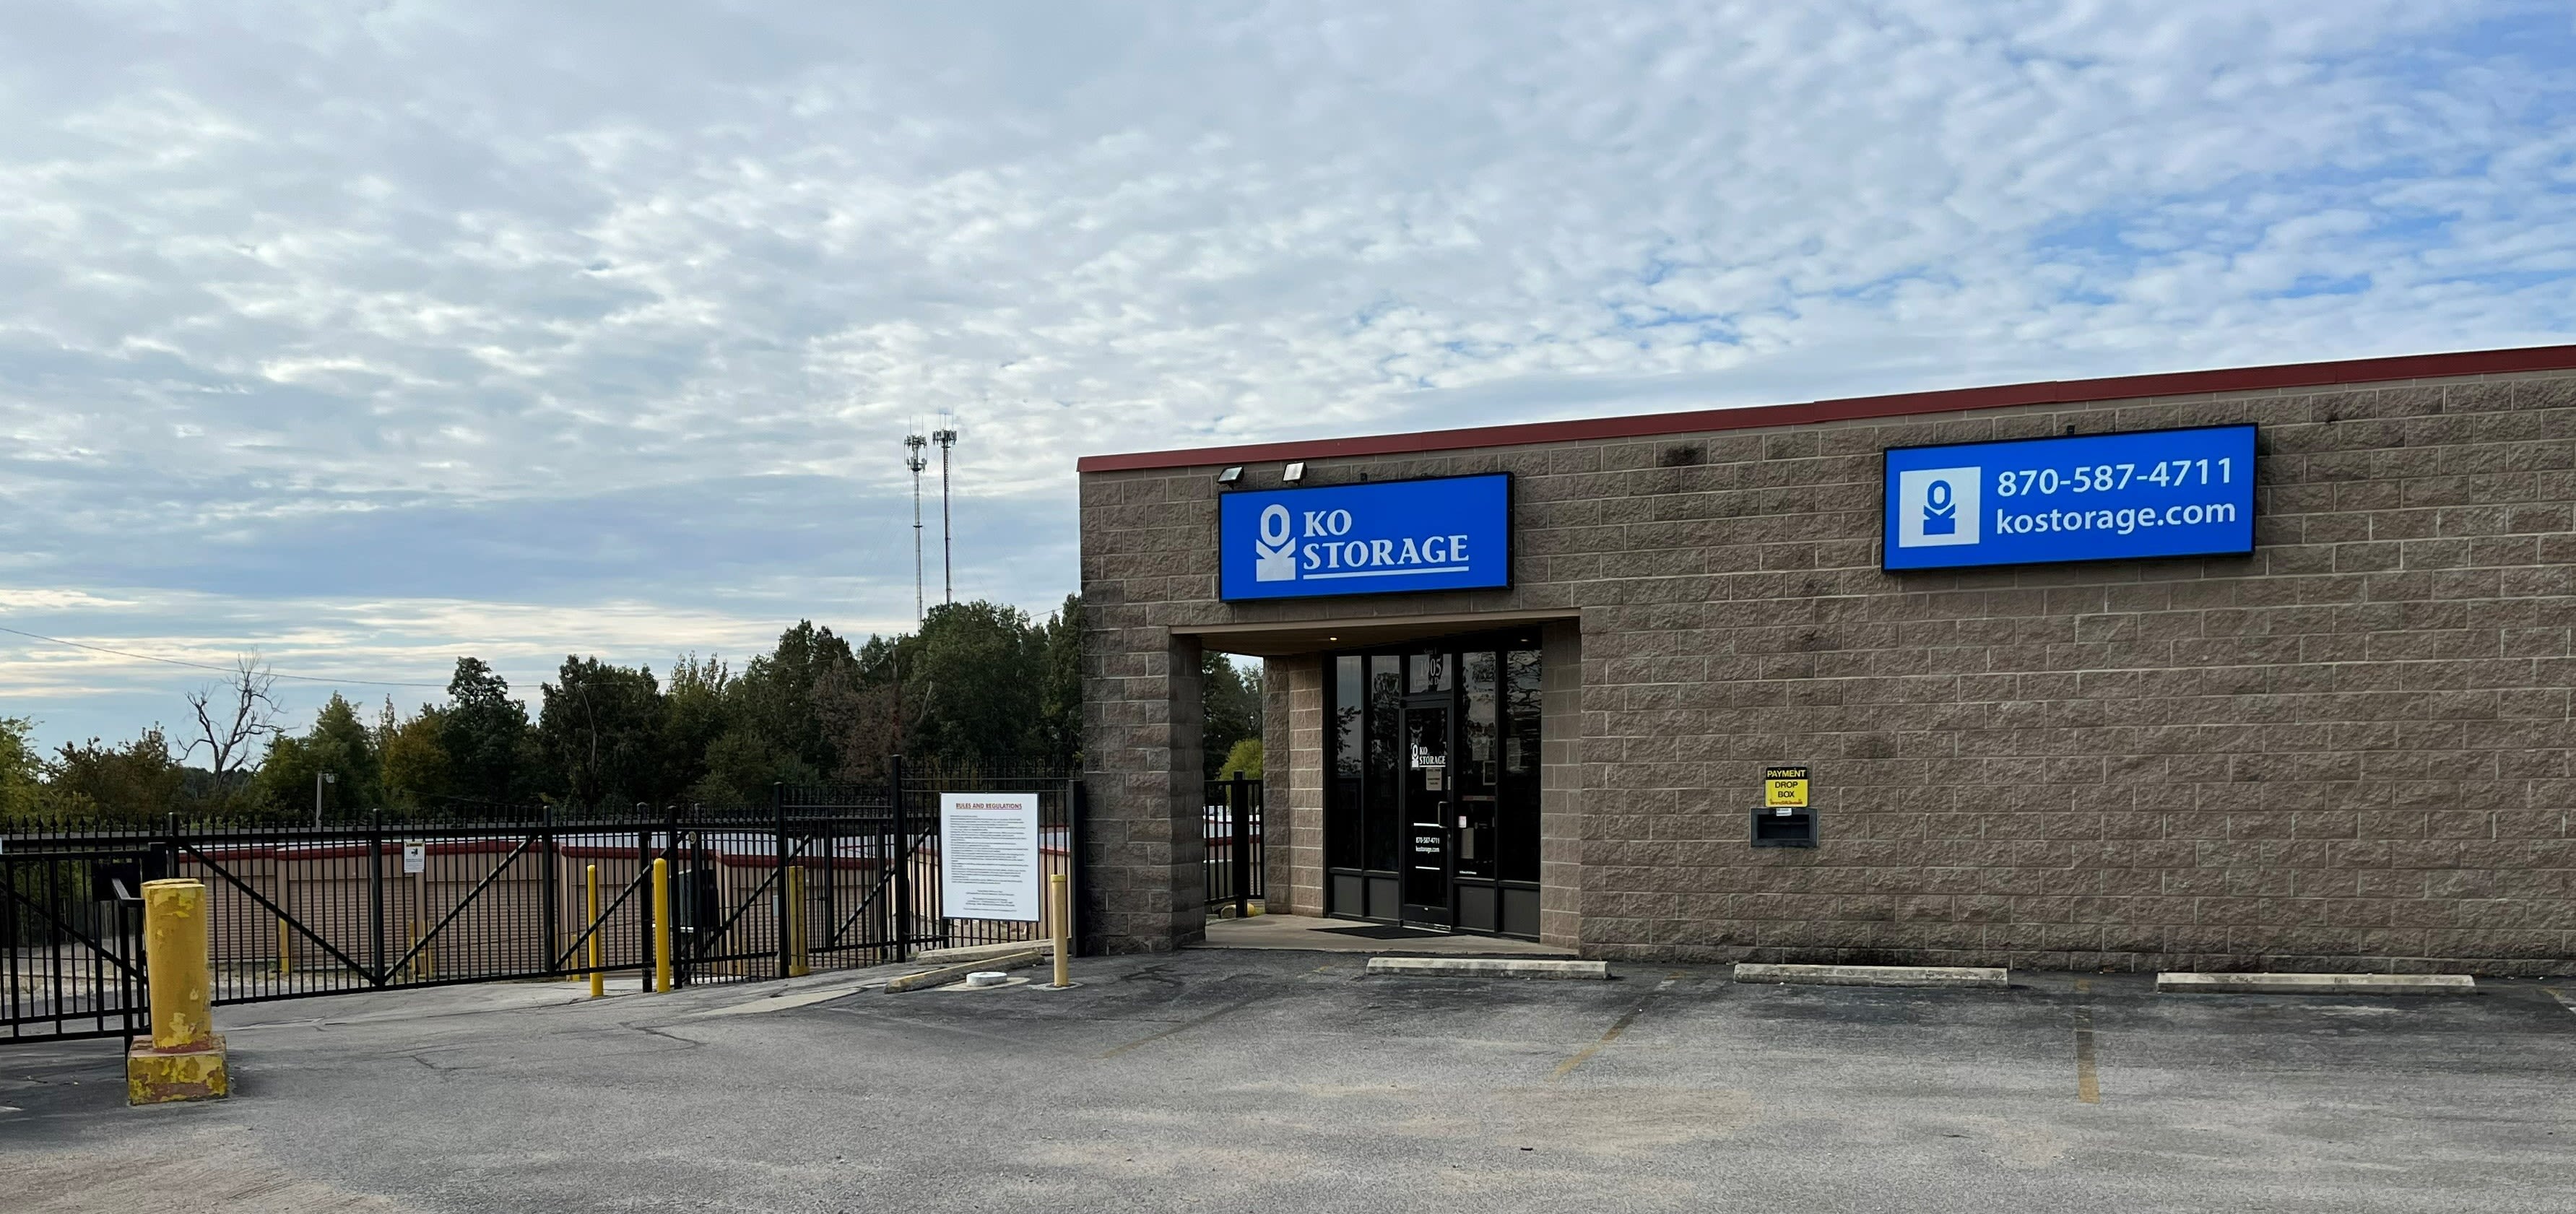 Reviews of KO Storage in Paragould, Arkansas